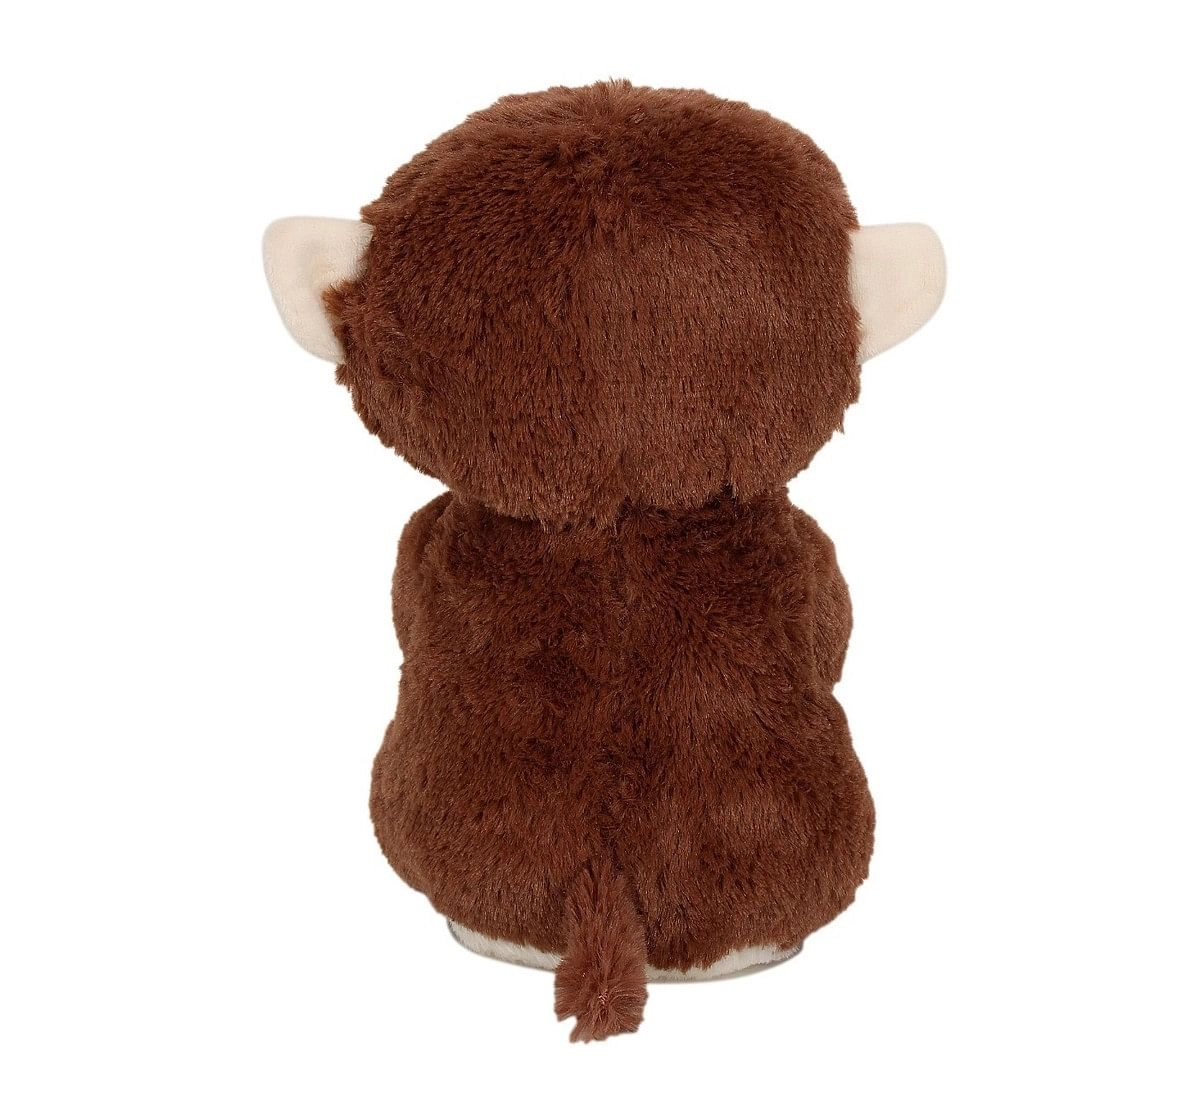 Fuzzbuzz Sitting Monkey - 25Cm Quirky Soft Toys for Kids age 0M+ - 25 Cm (Brown)